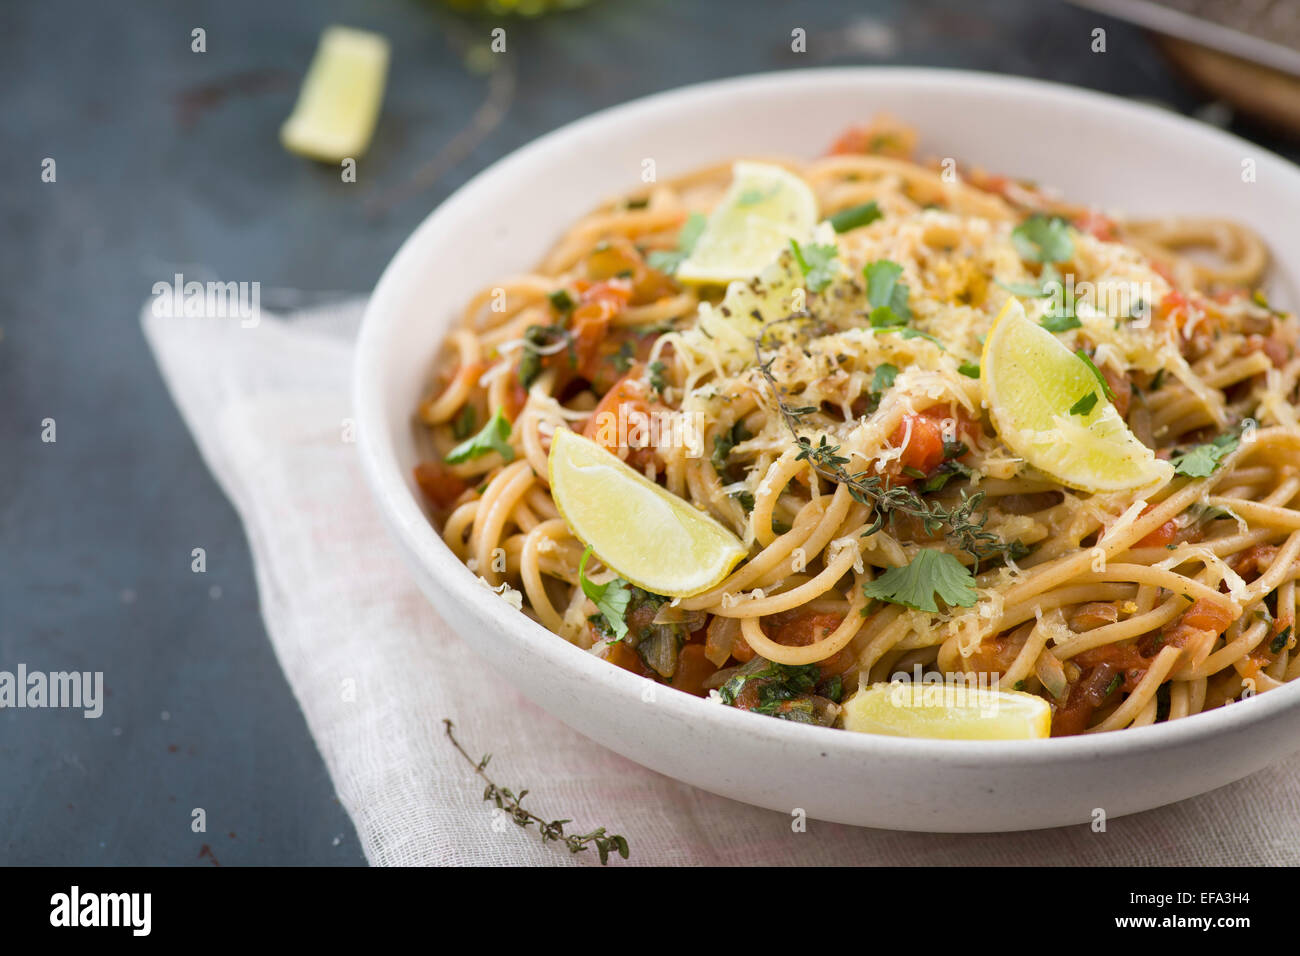 spaghetti with tomato sauce and herbs Stock Photo